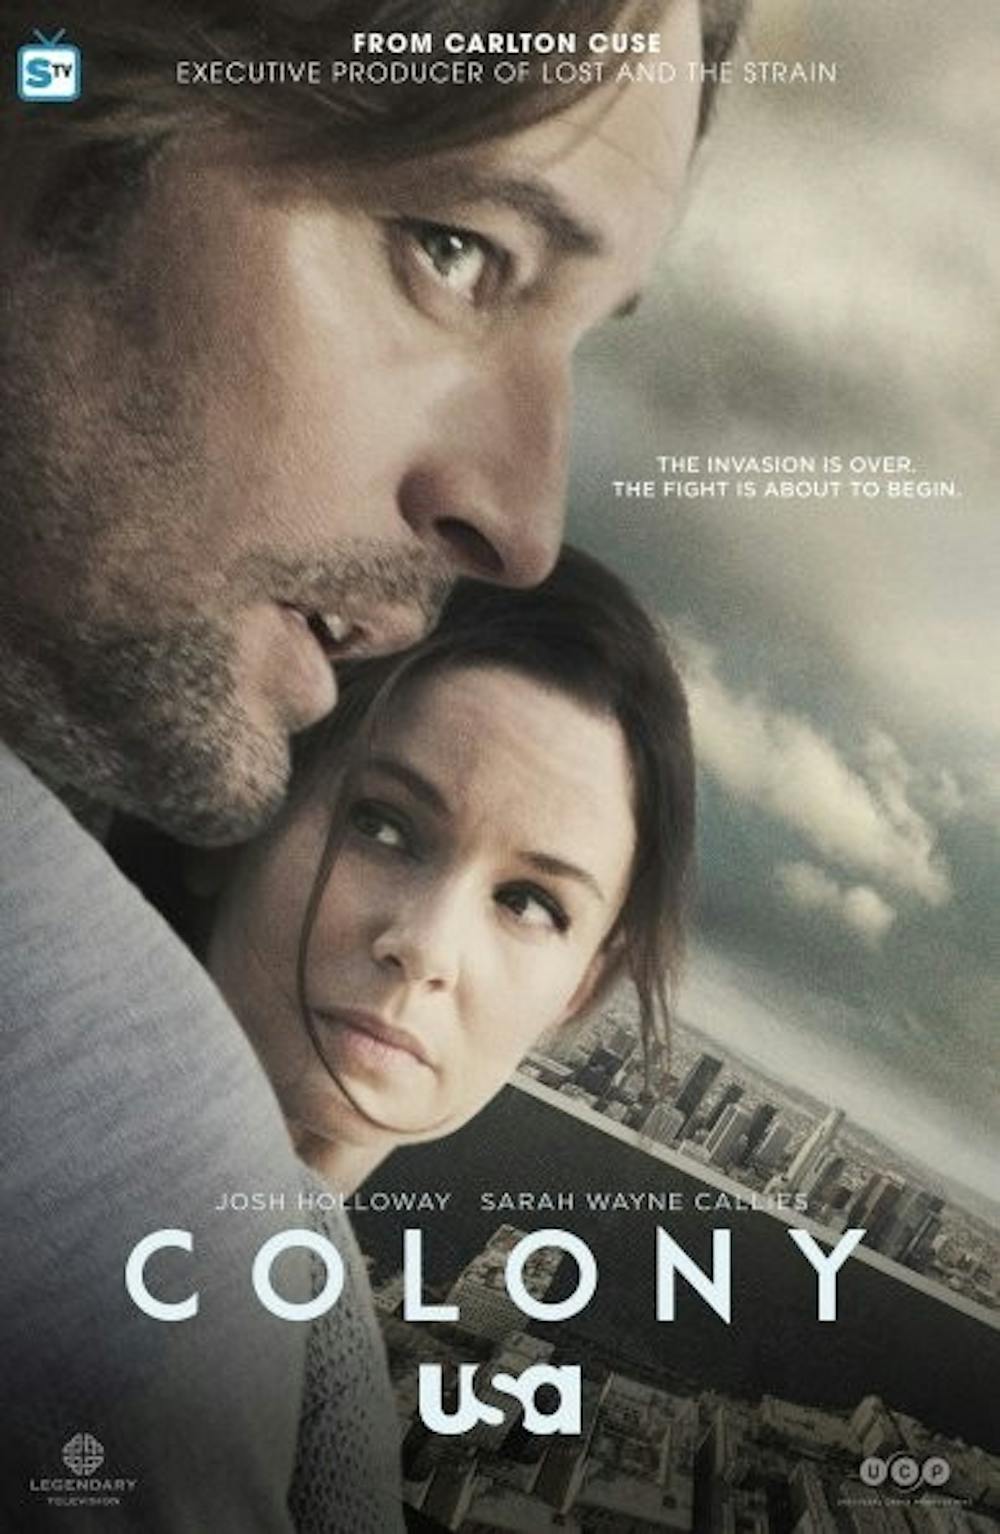 <p>USA's new sci-fi show, "Colony" flops.</p>